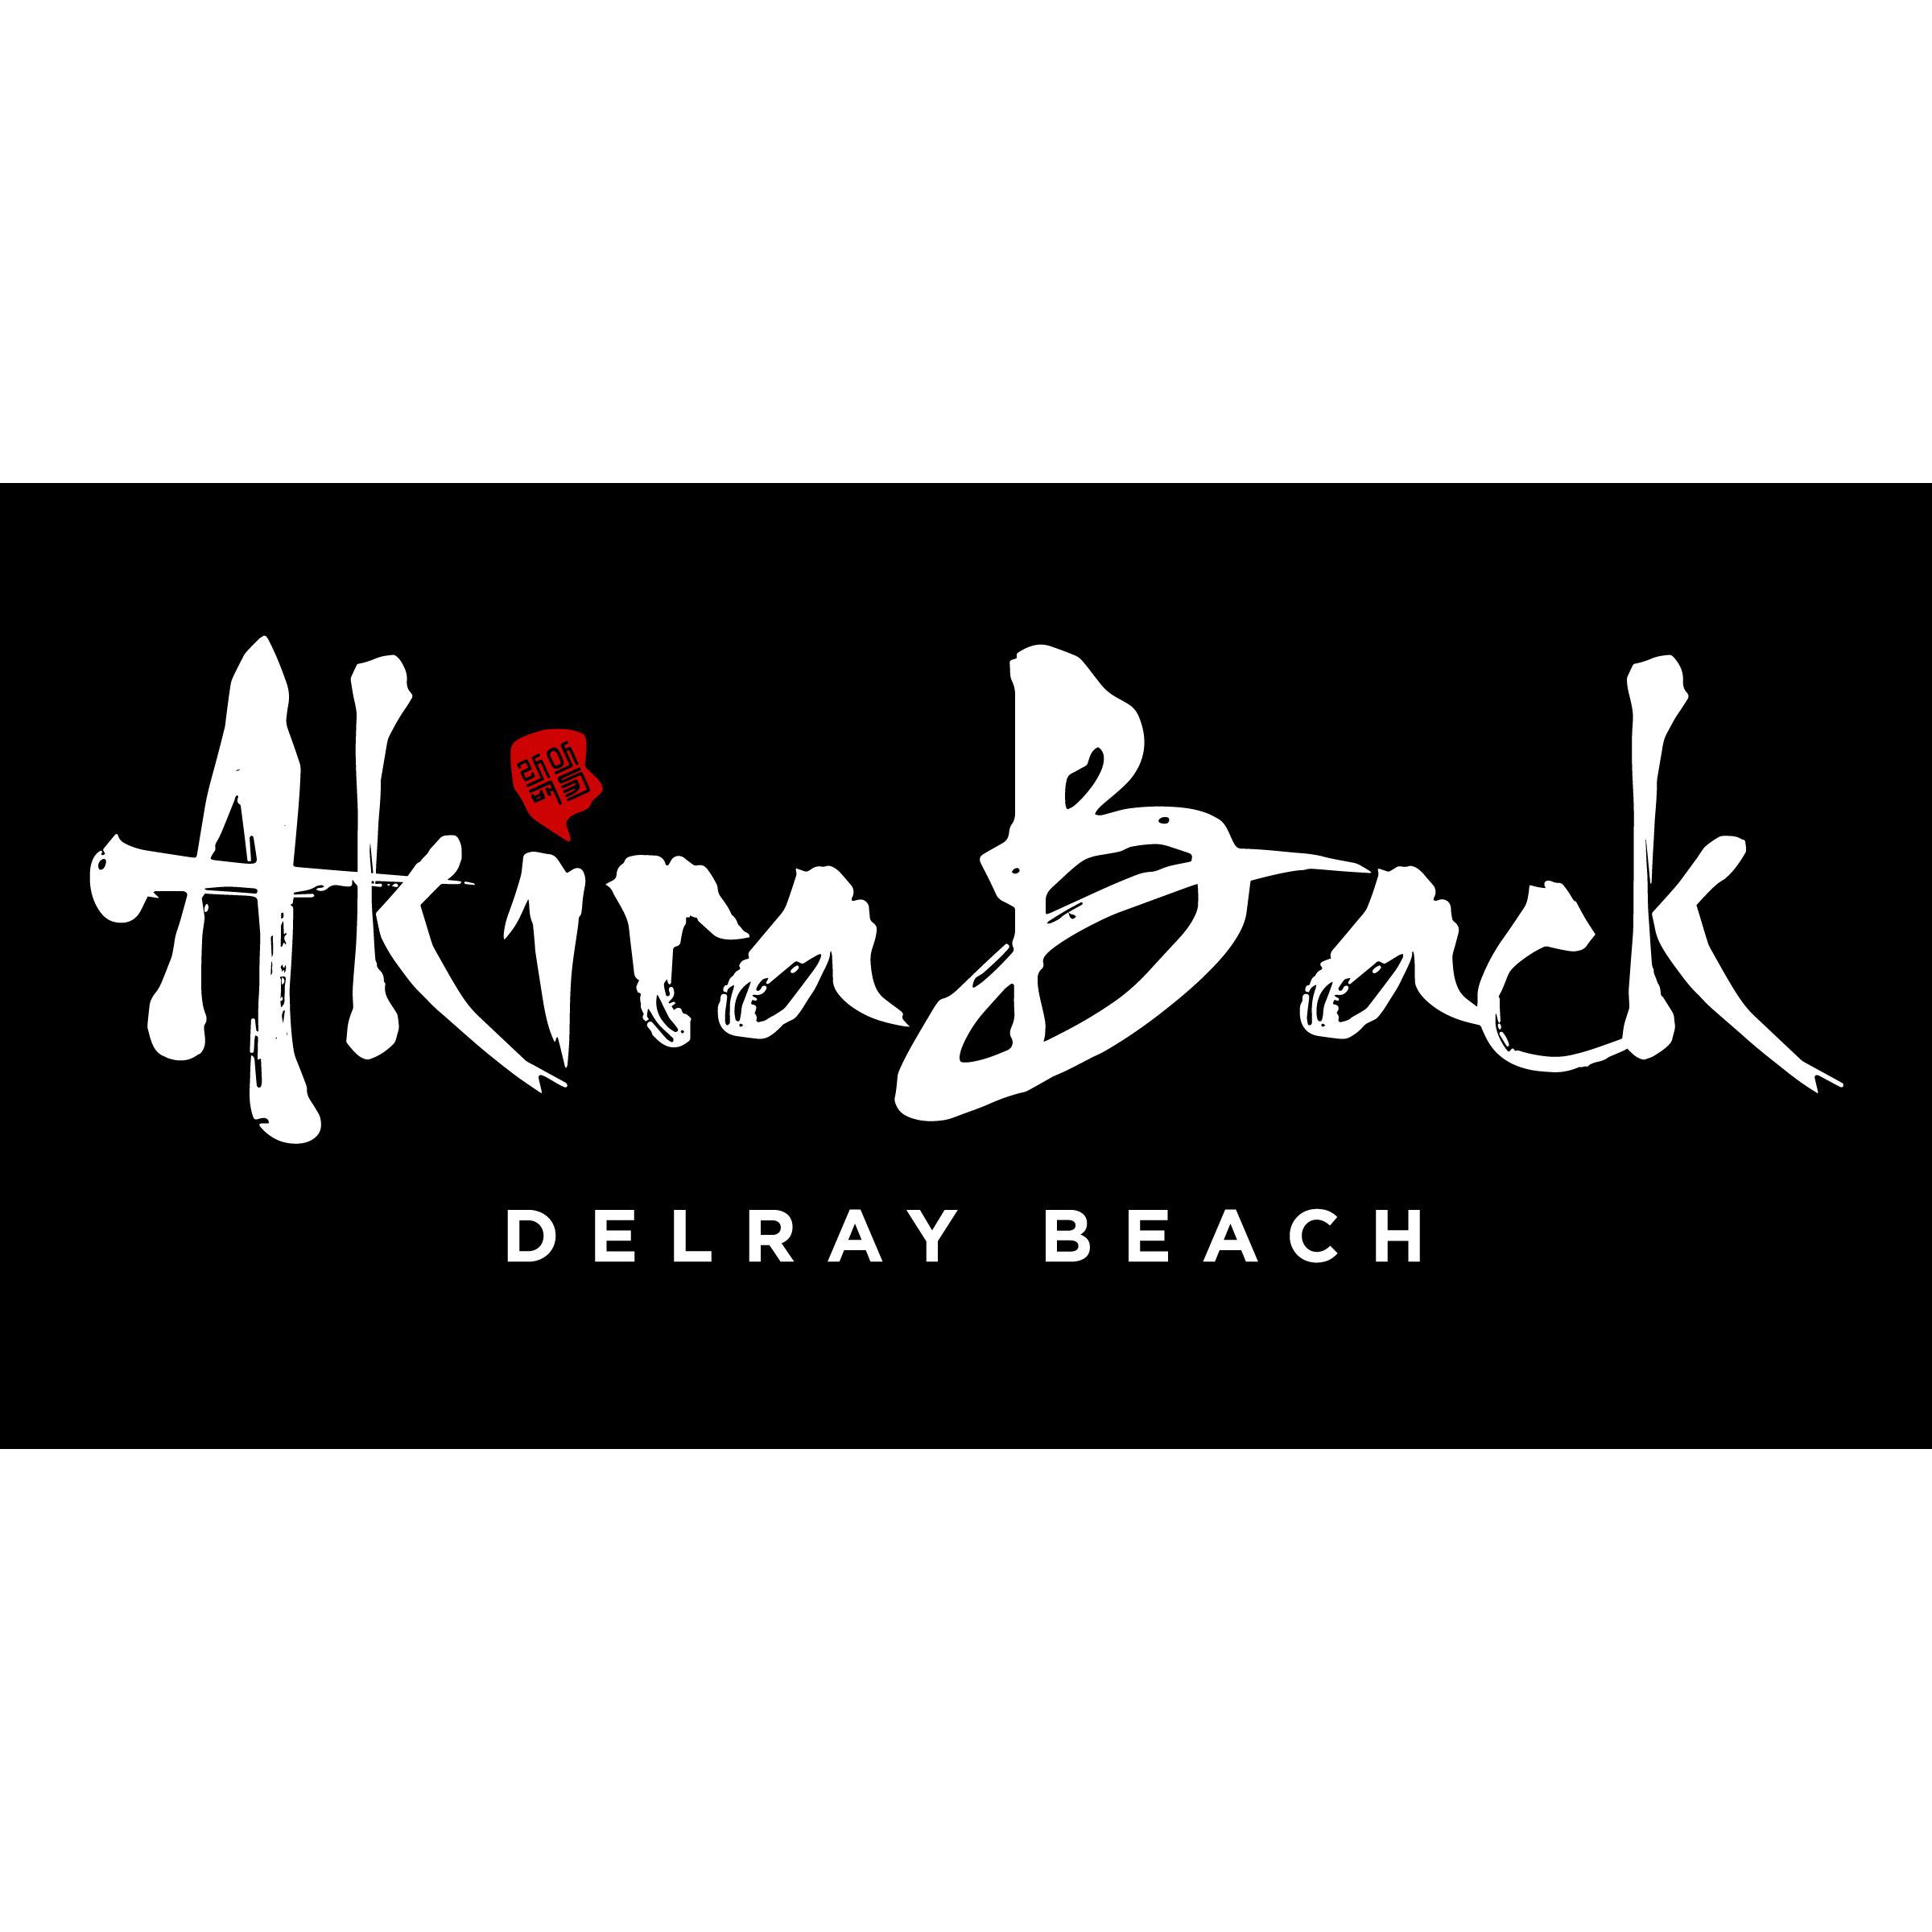 Akira Back - Delray Beach, FL 33444 - (561)739-1708 | ShowMeLocal.com